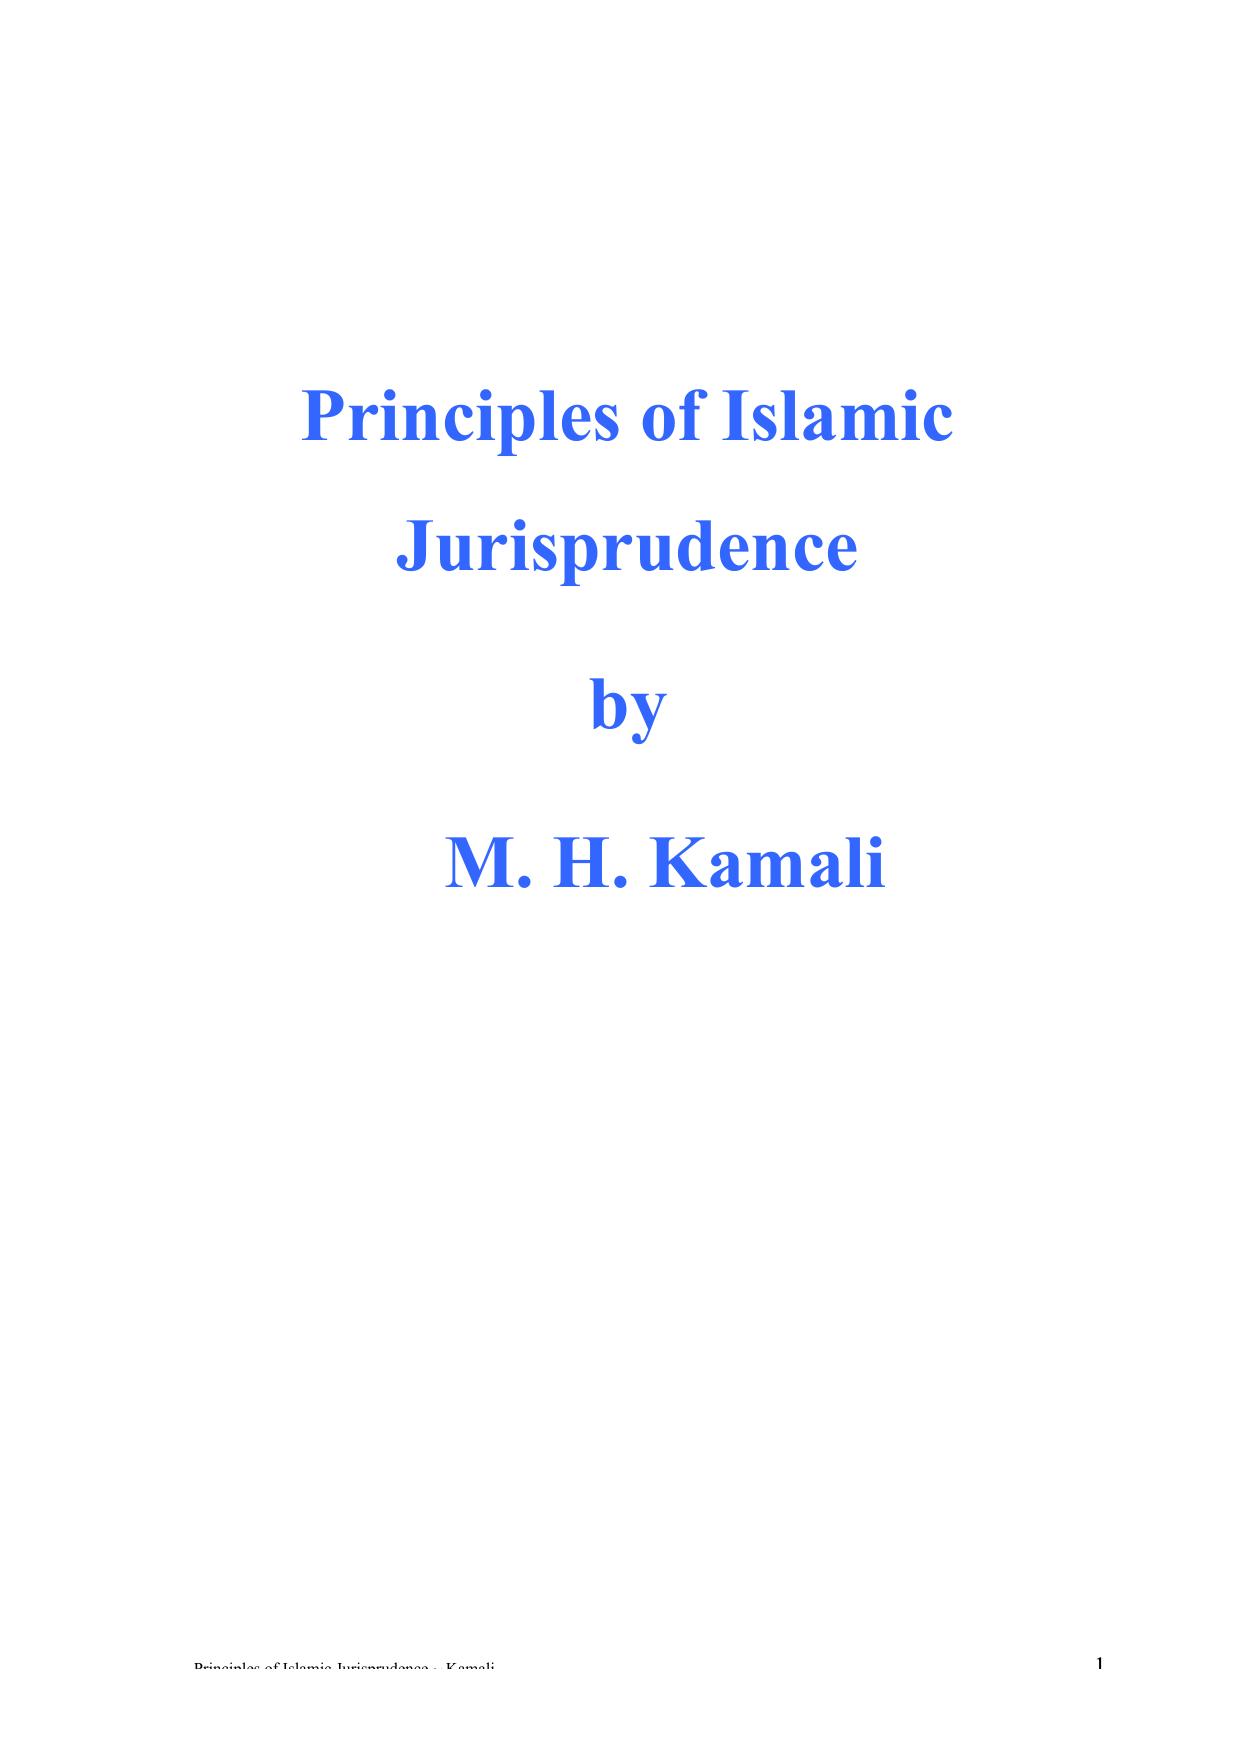 Principle of Islamic Jurisprudwnce